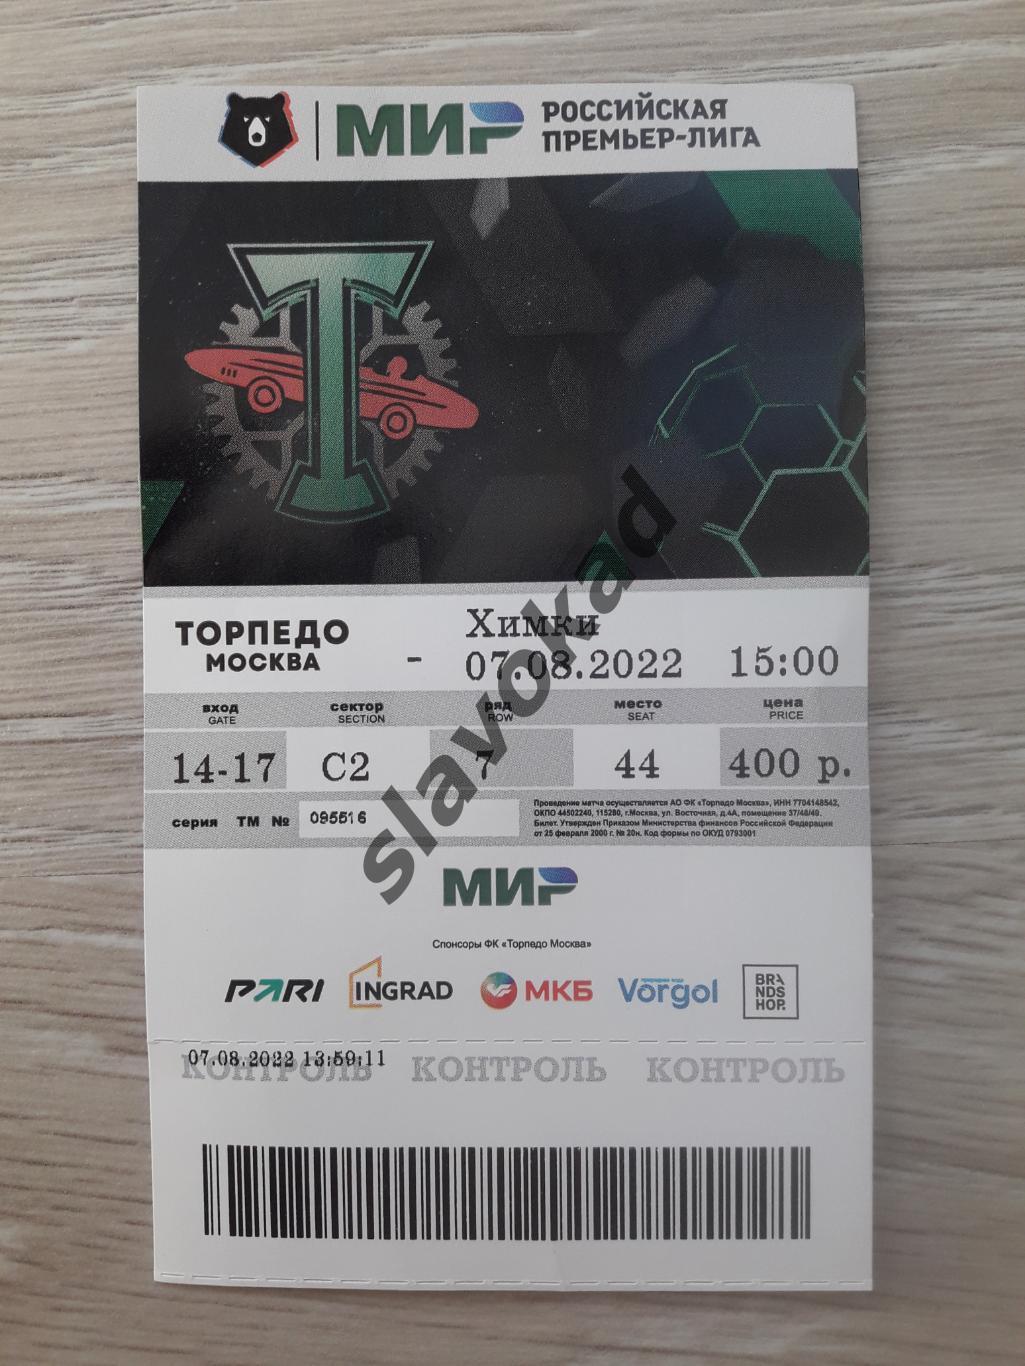 Торпедо Москва - Химки 07.08.2022 - билет